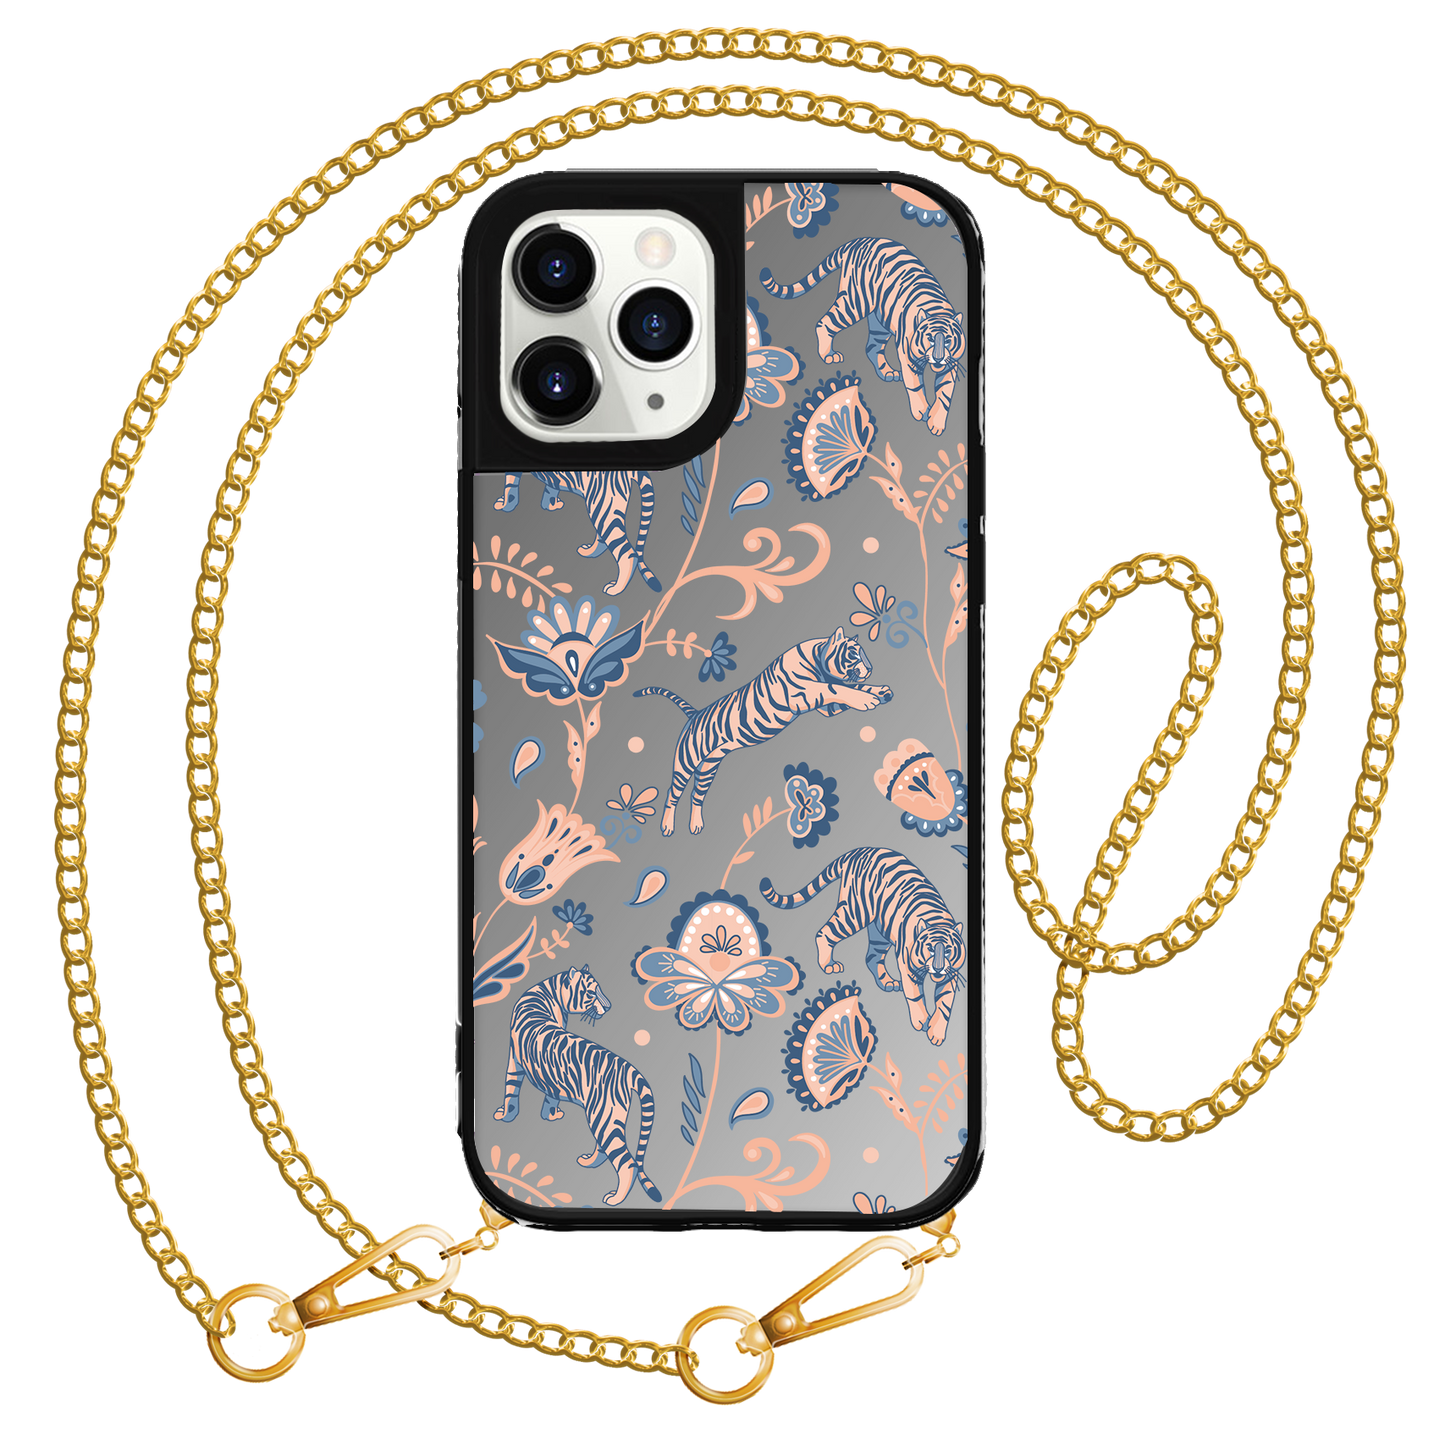 iPhone Mirror Grip Case - Tiger & Floral 5.0